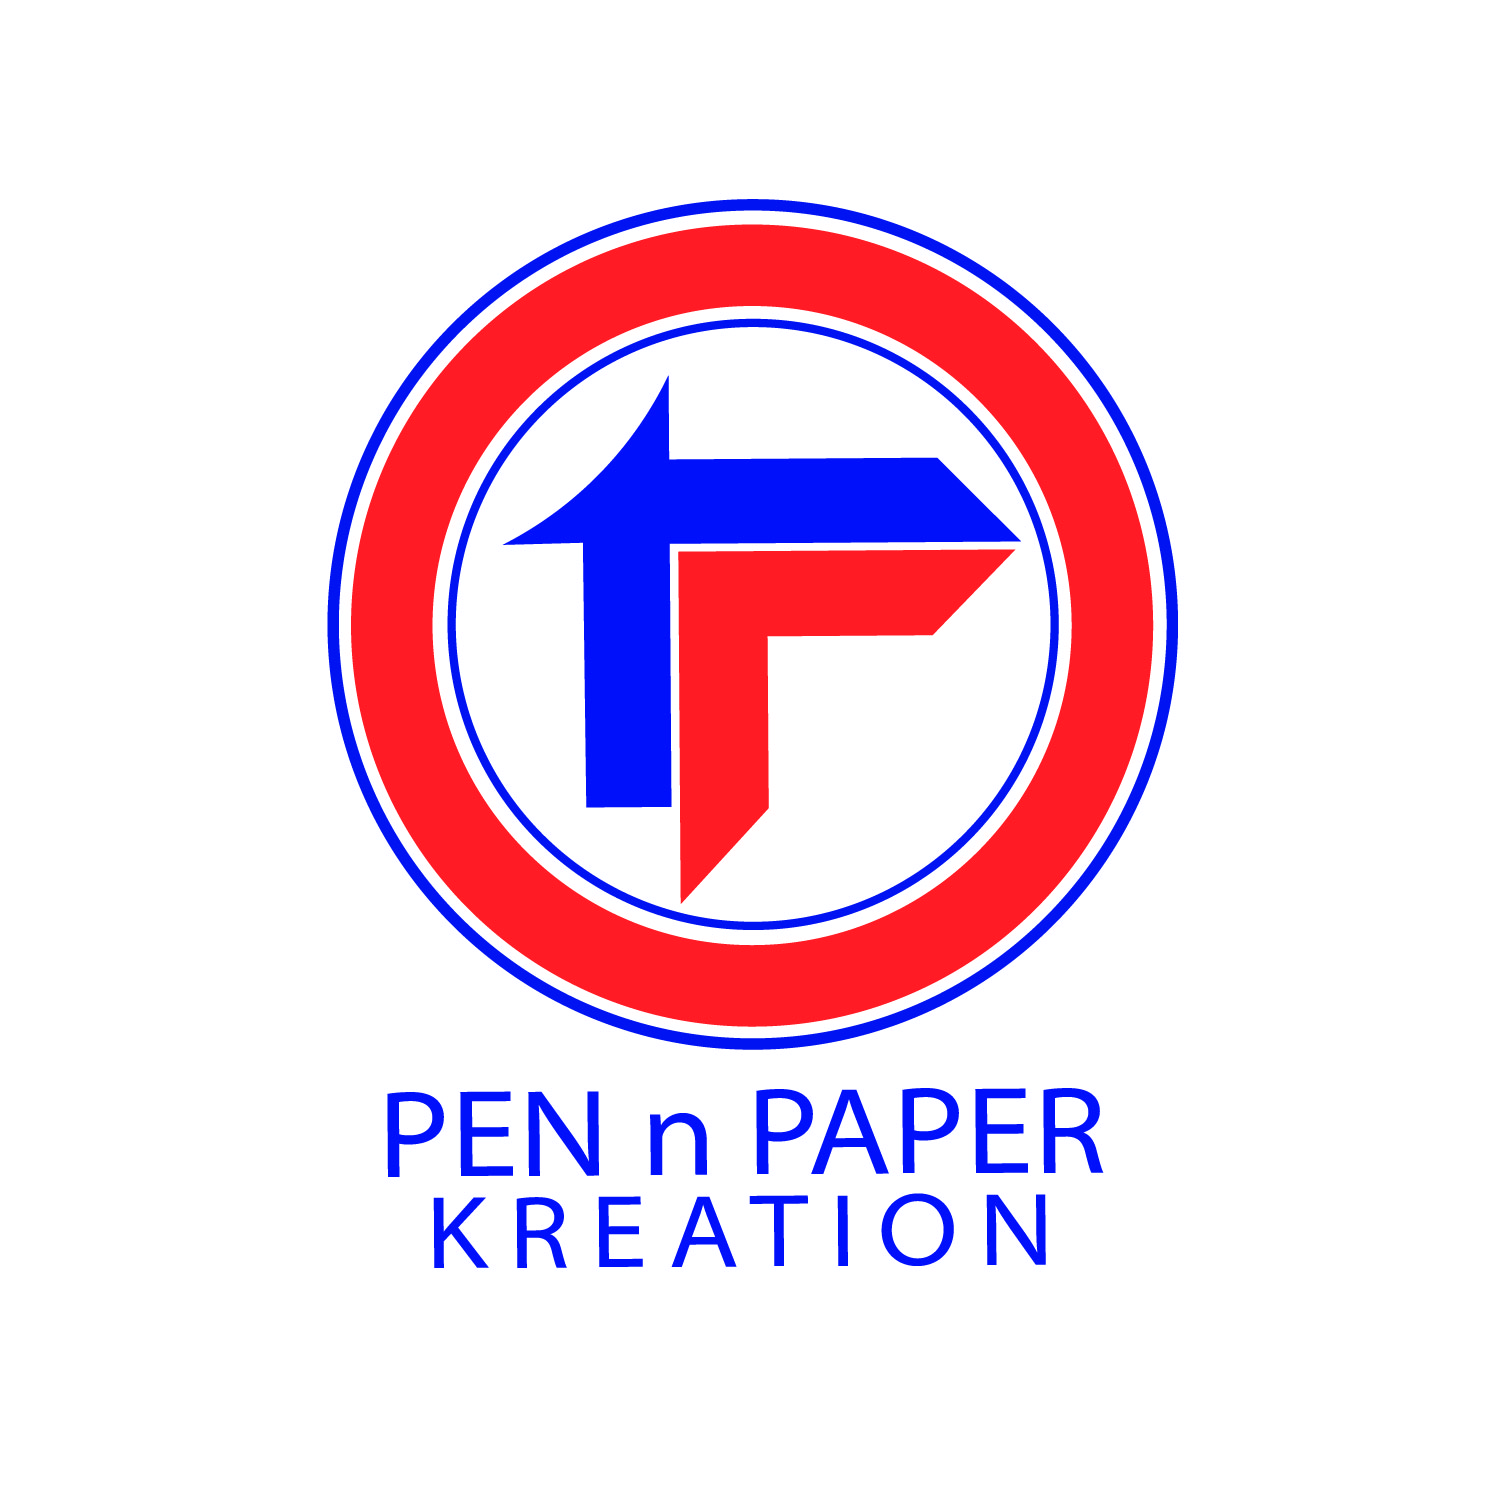 Pen n Paper Kreation